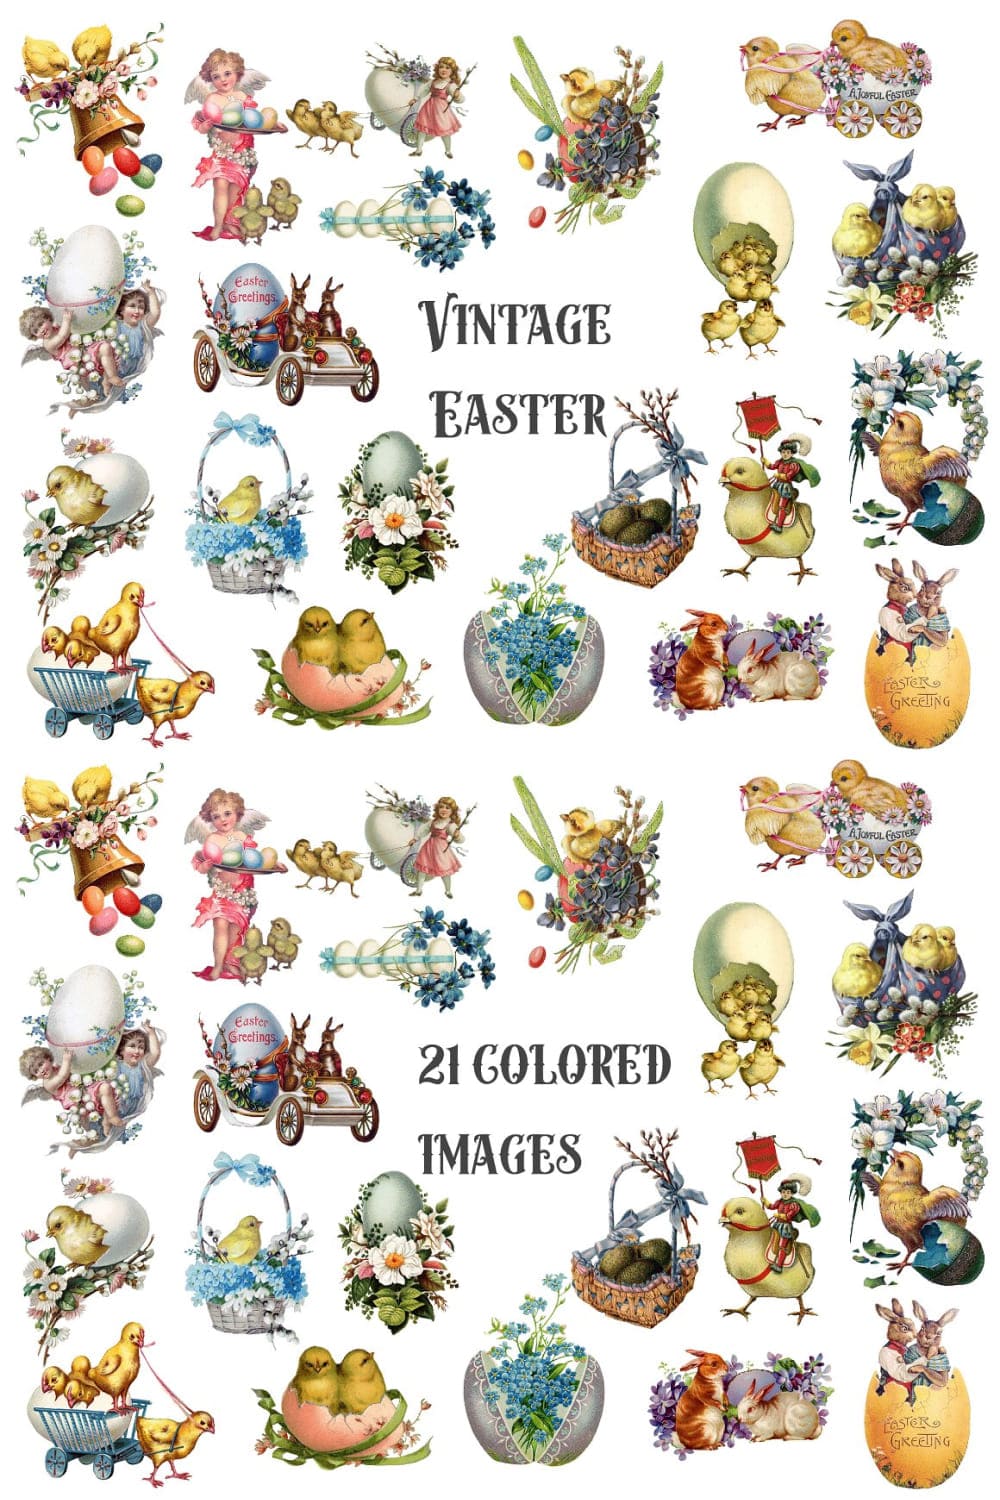 Vintage Easter Clipart - pinterest image preview.